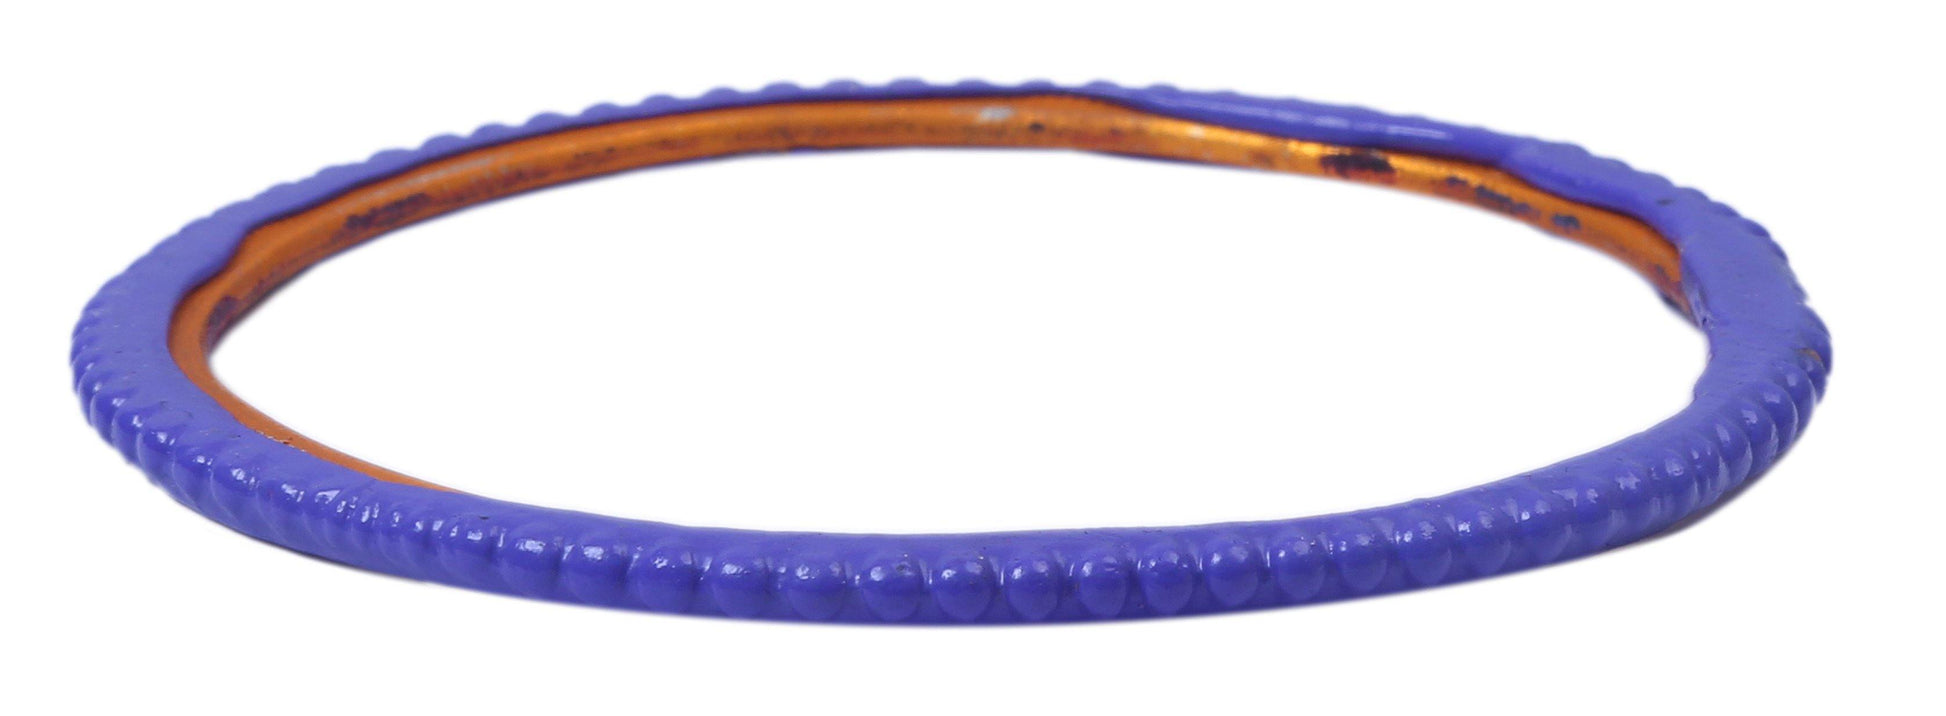 sukriti casual fashion blue lac bangles for girls, women - set of 8